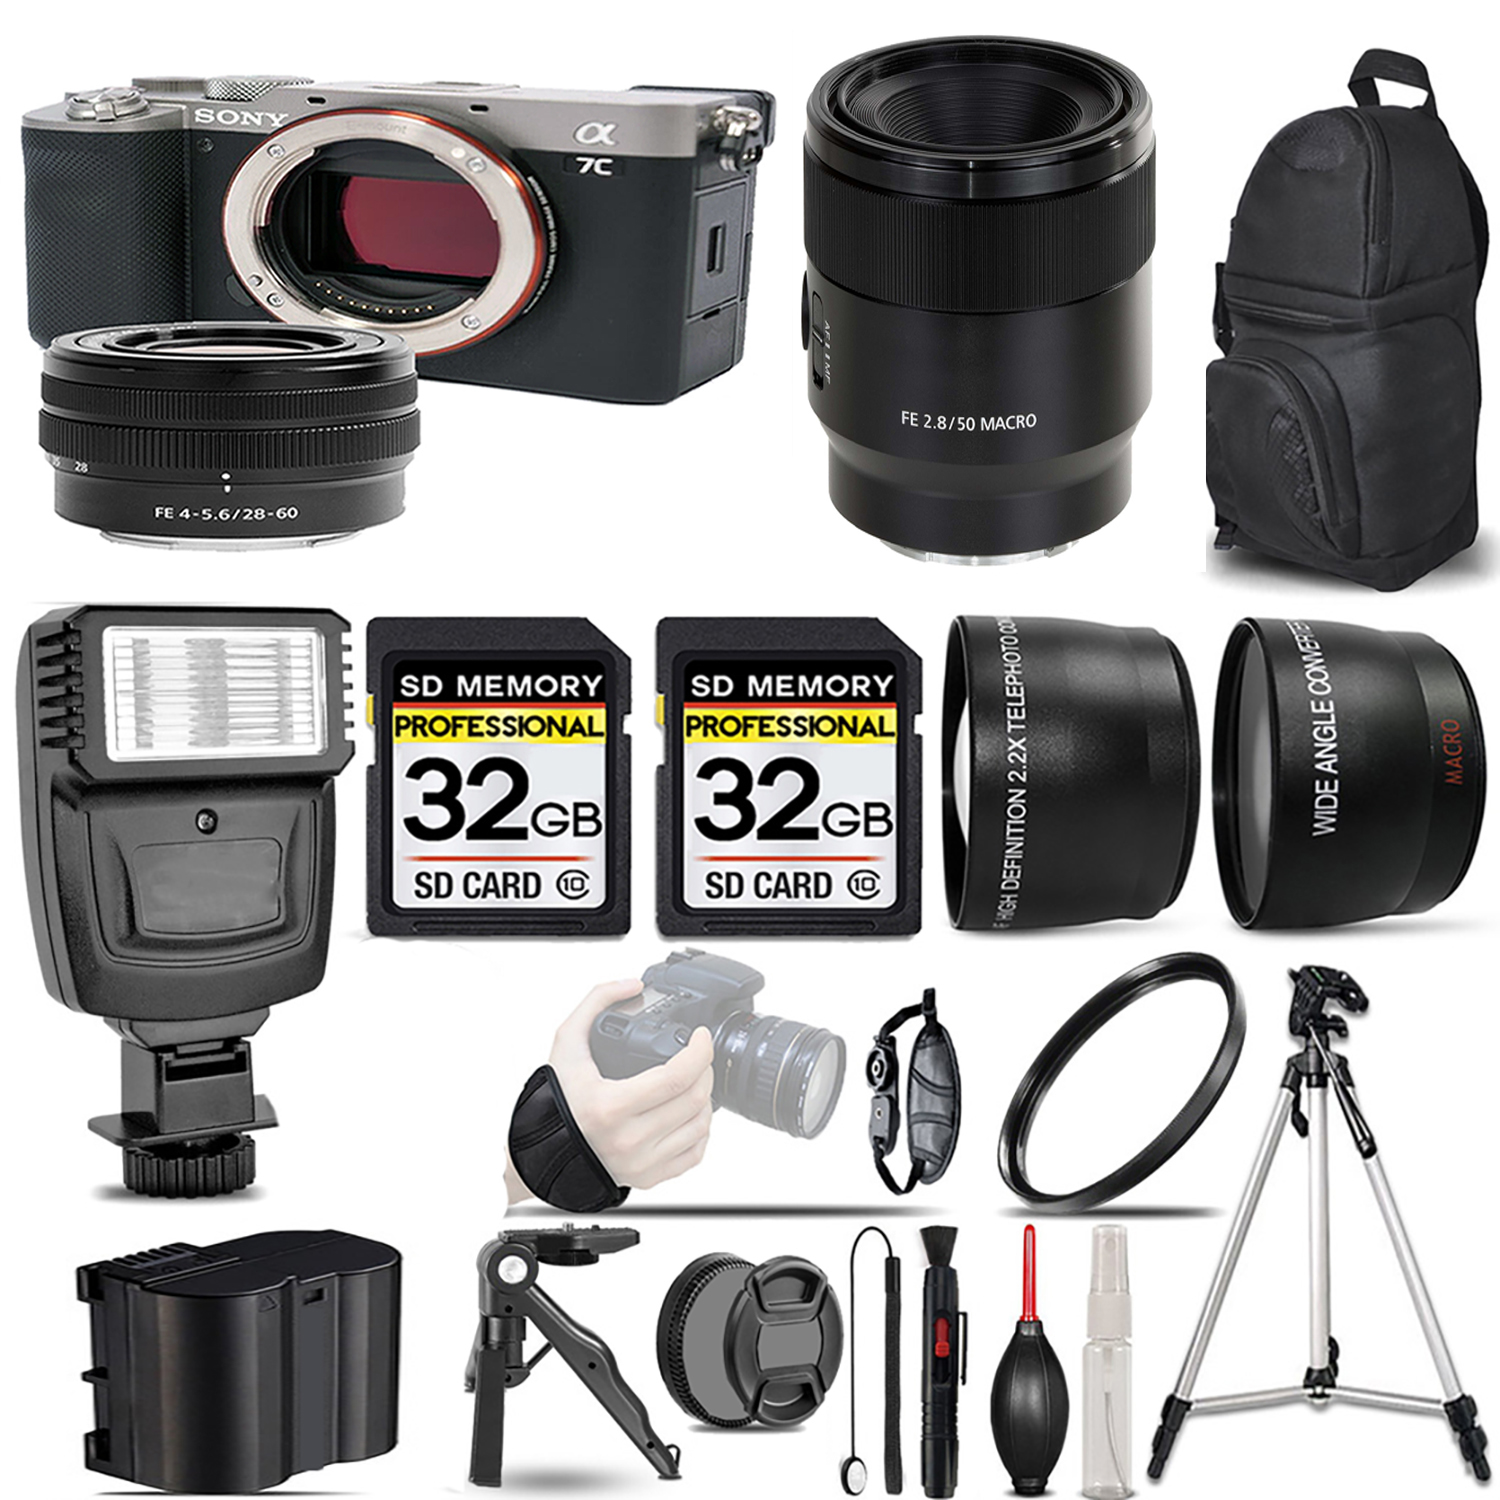 Alpha a7C Camera (Silver) + 28-60mm Lens + 50mm f/2.8 Macro Lens + Flash + 64GB *FREE SHIPPING*